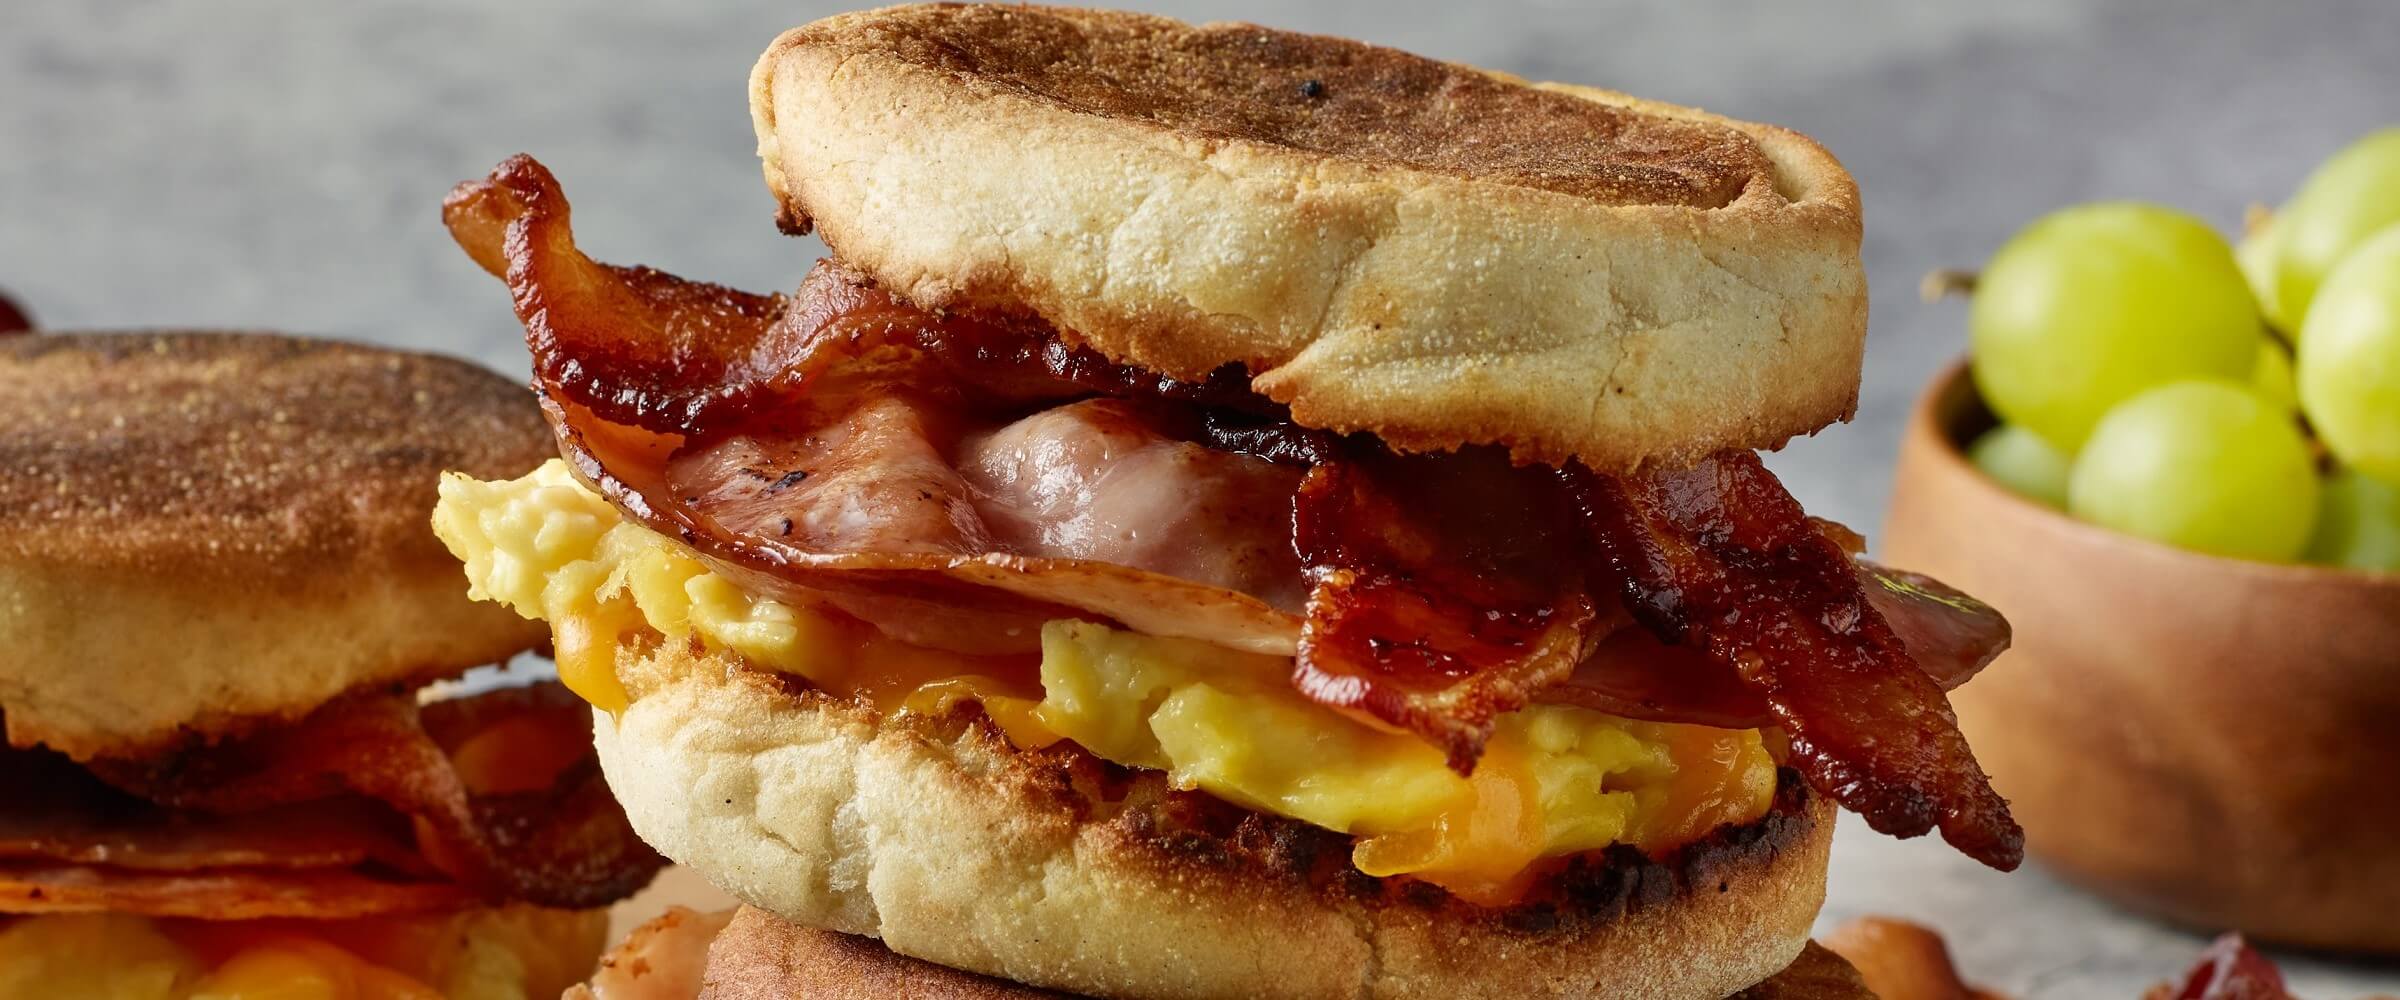 https://www.hormel.com/brands/hormel-natural-choice-meats/wp-content/uploads/sites/9/Natural_Choice_Stacked_Breakfast_Sandwich.jpg